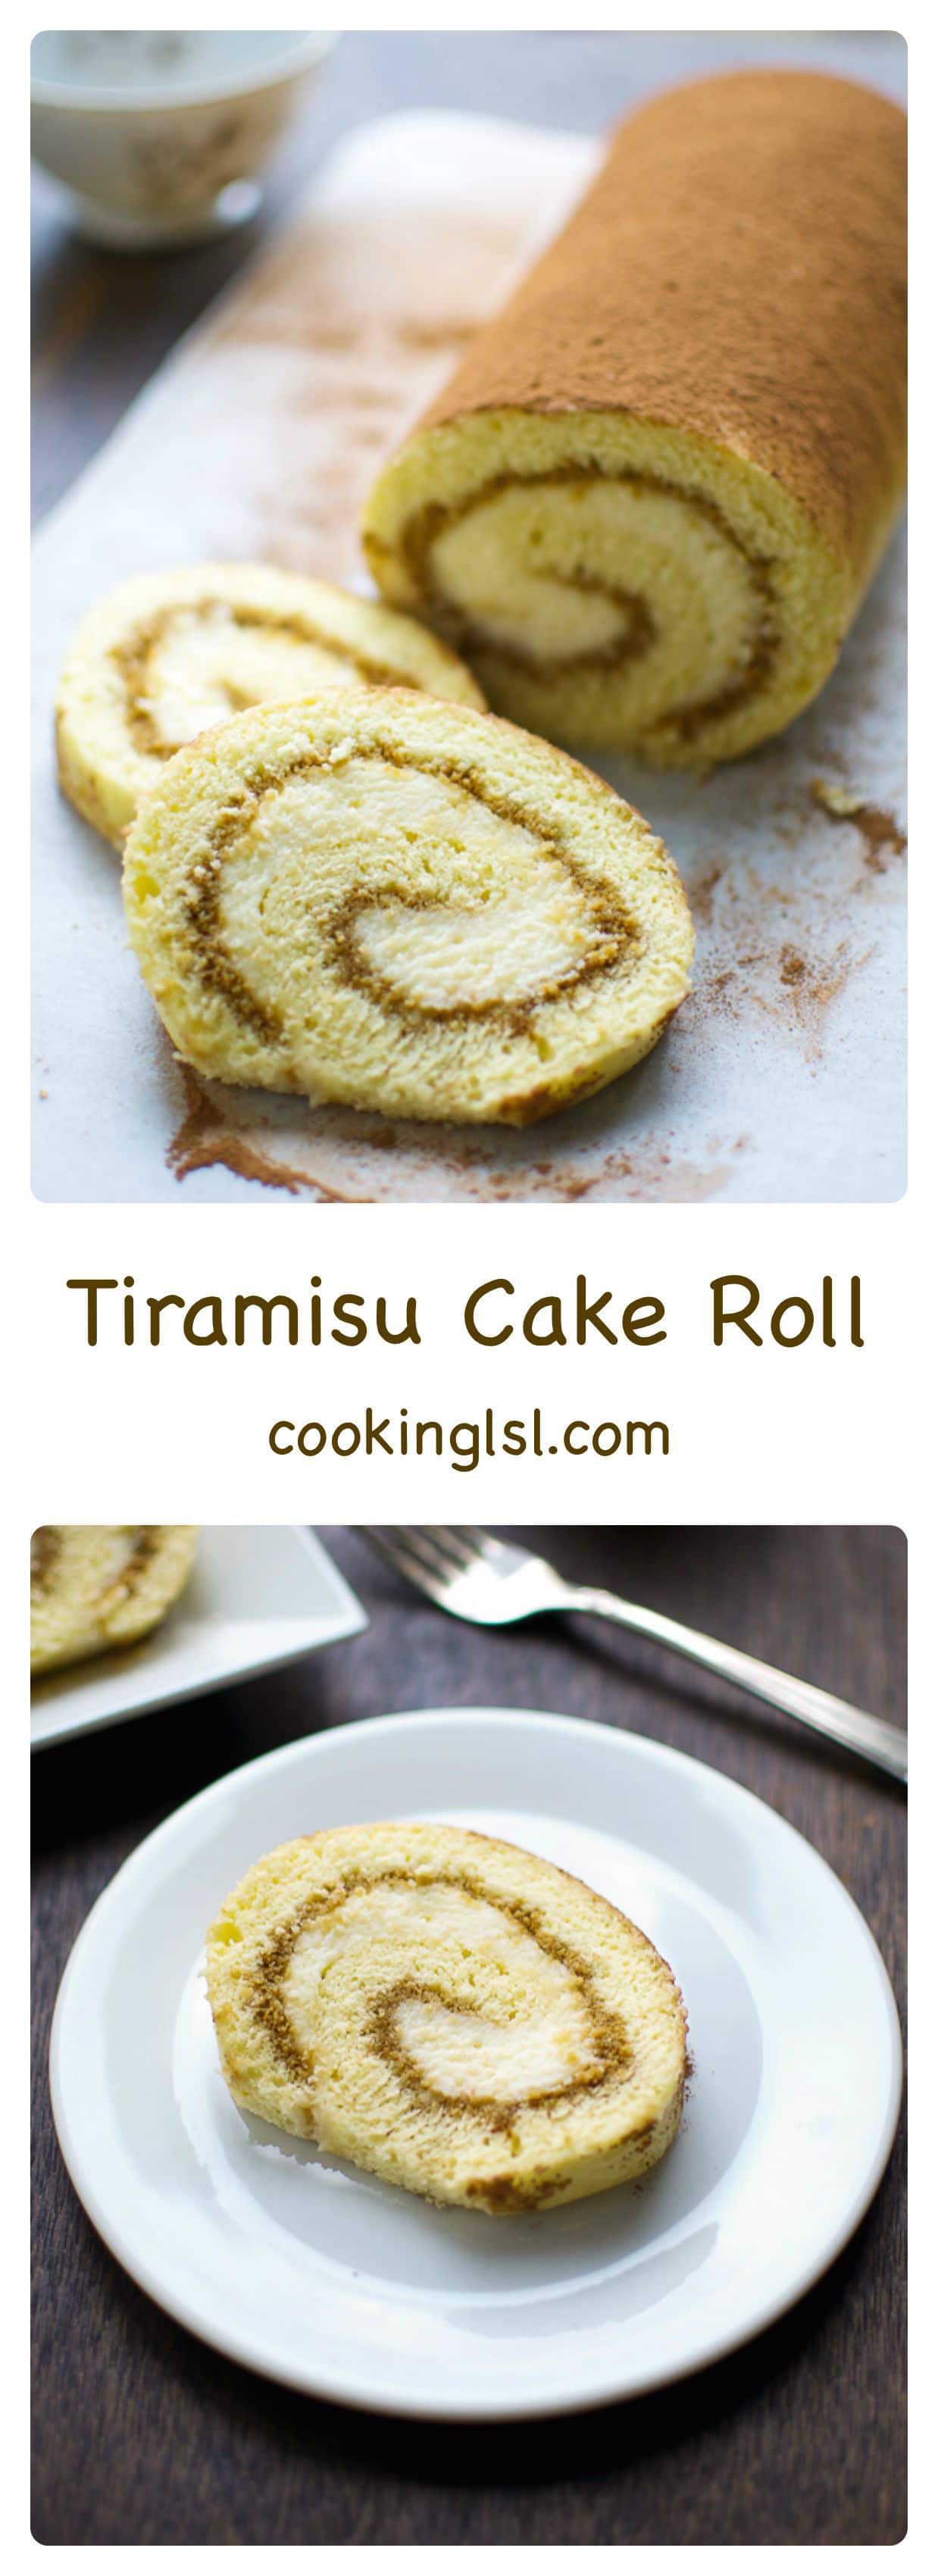 Tiramisu Cake Roll